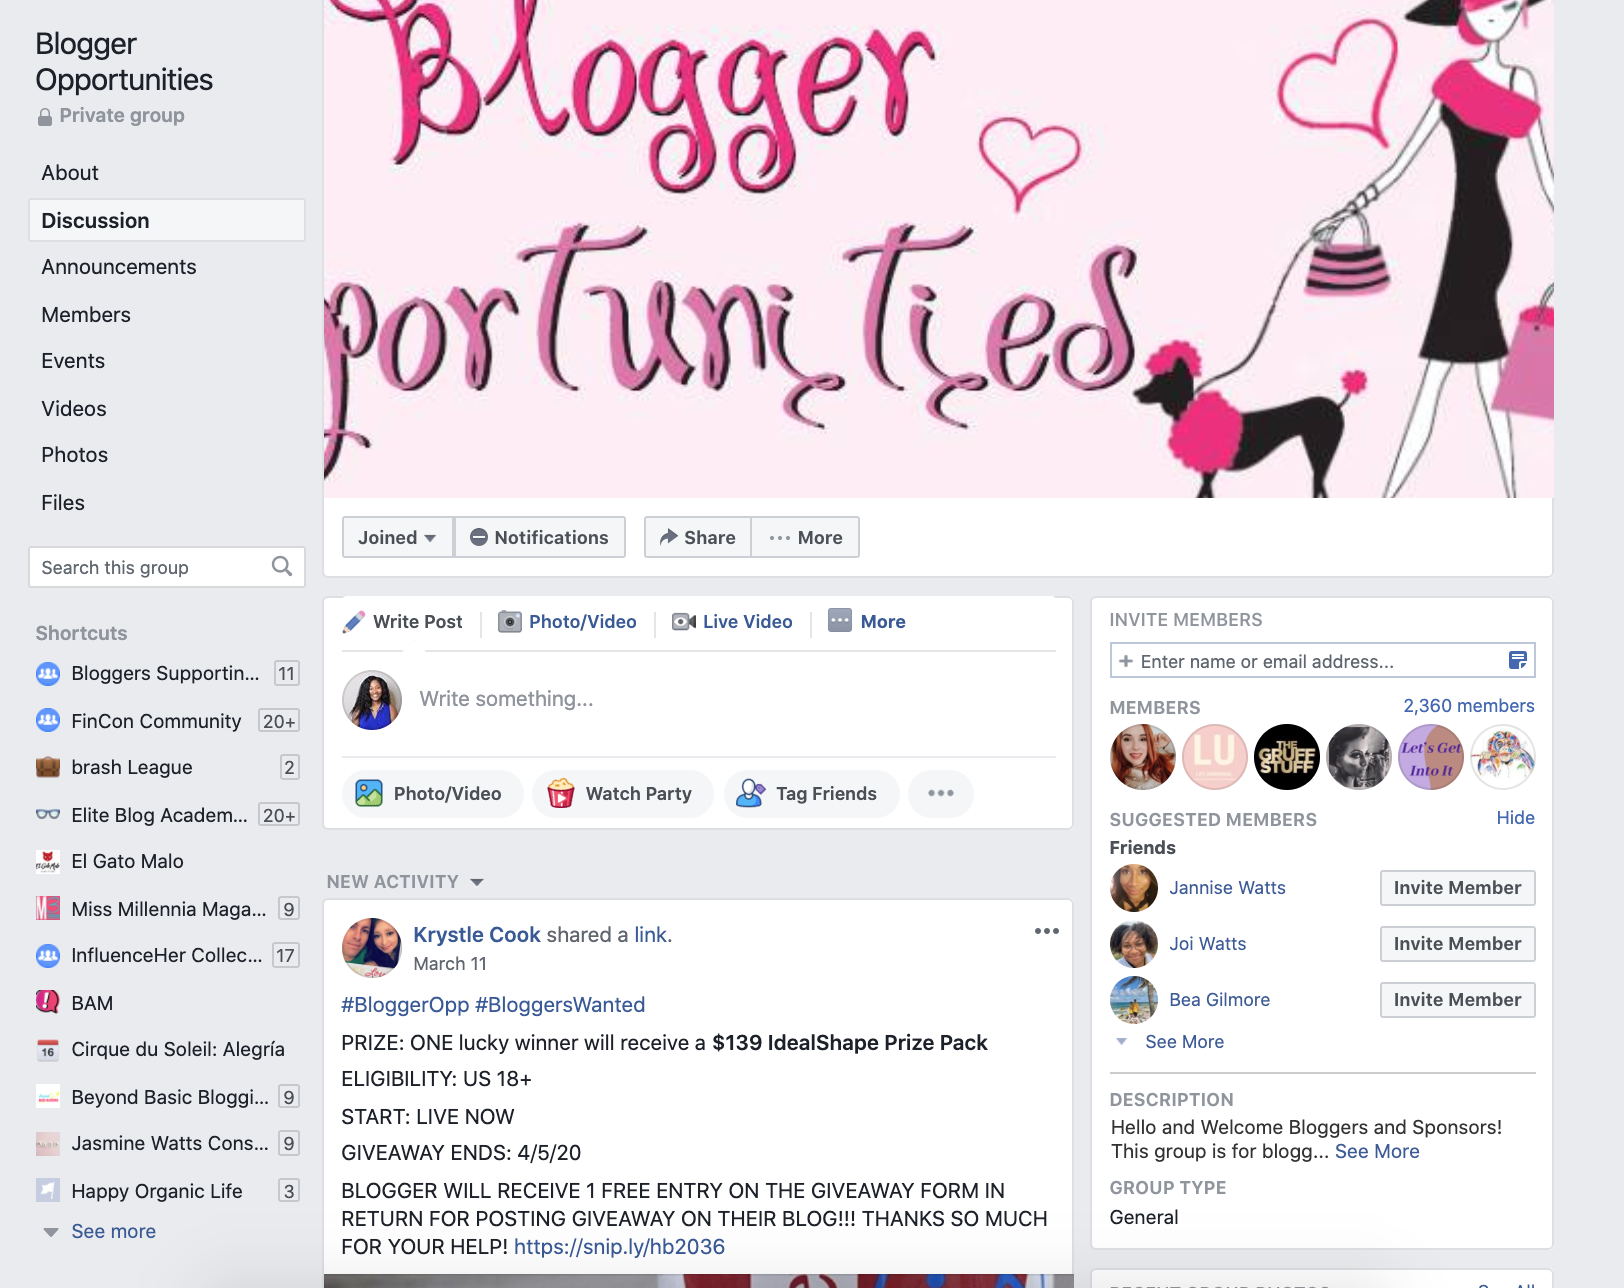 Blogger Opportunities